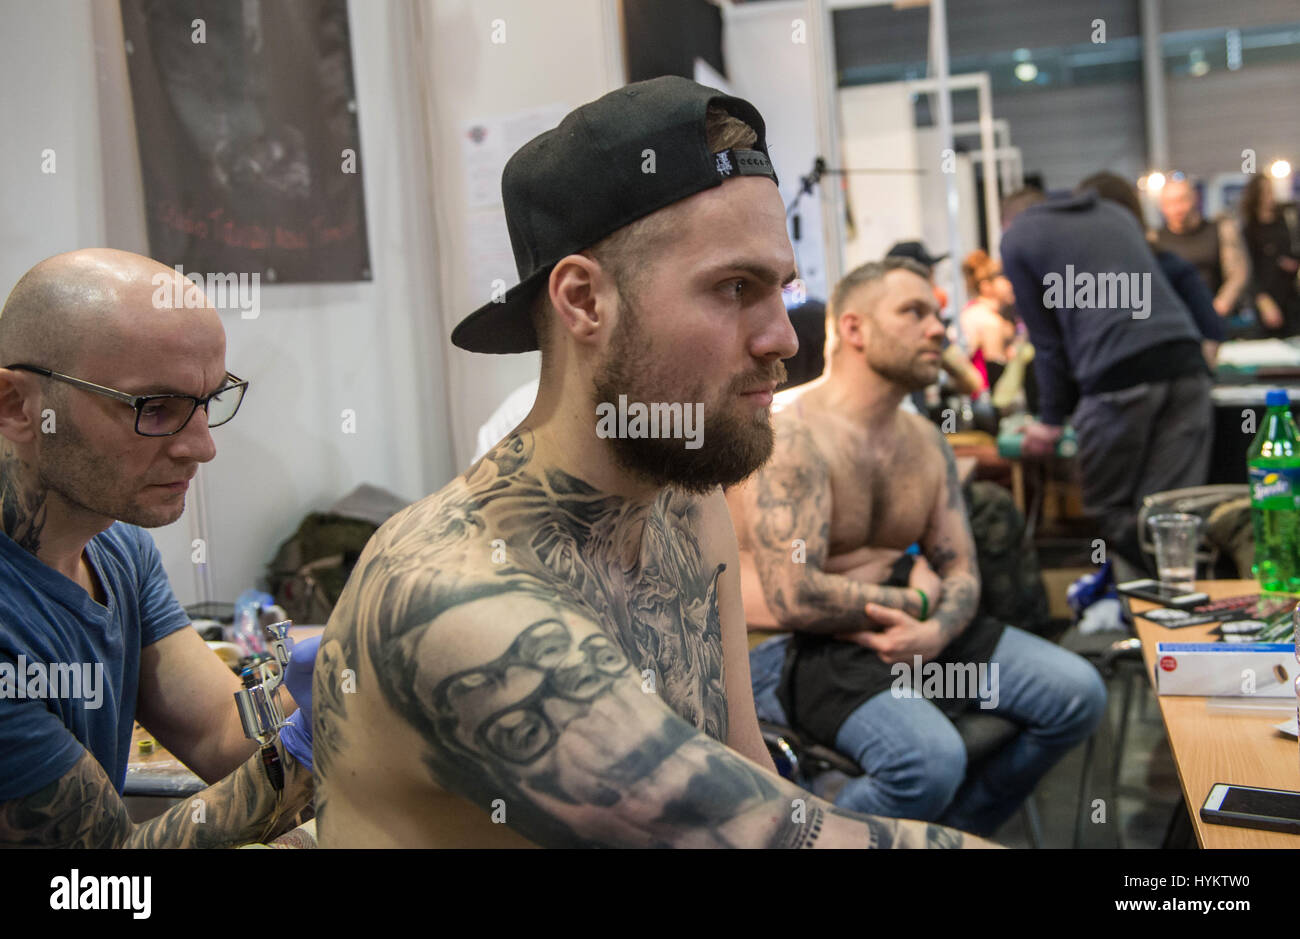 Männer intim tattoos